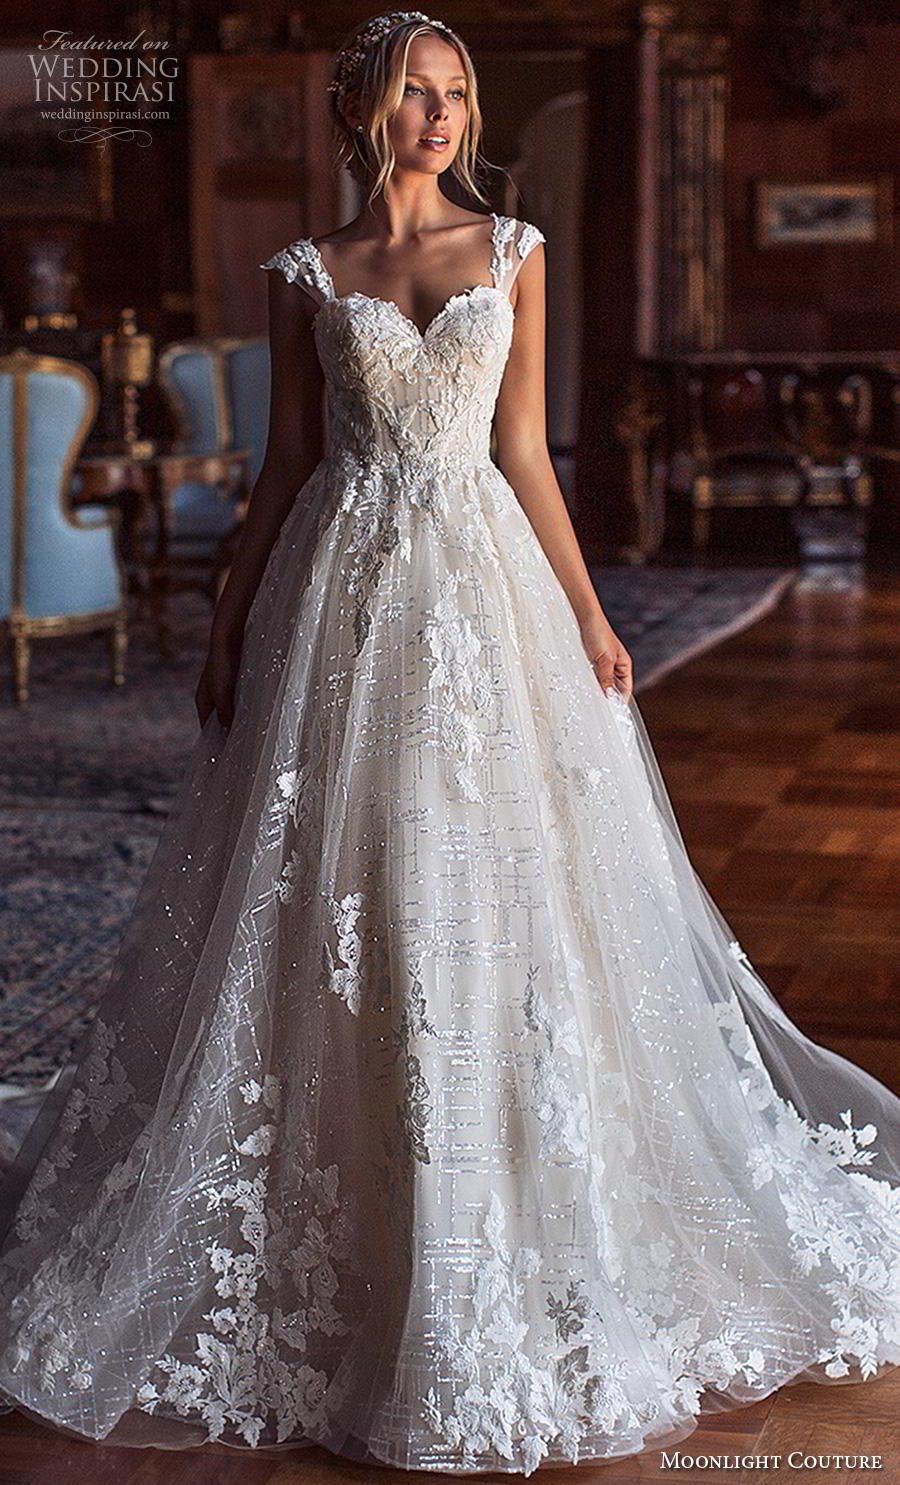 Moonlight Couture Spring 2019 Wedding Dresses | Wedding ...